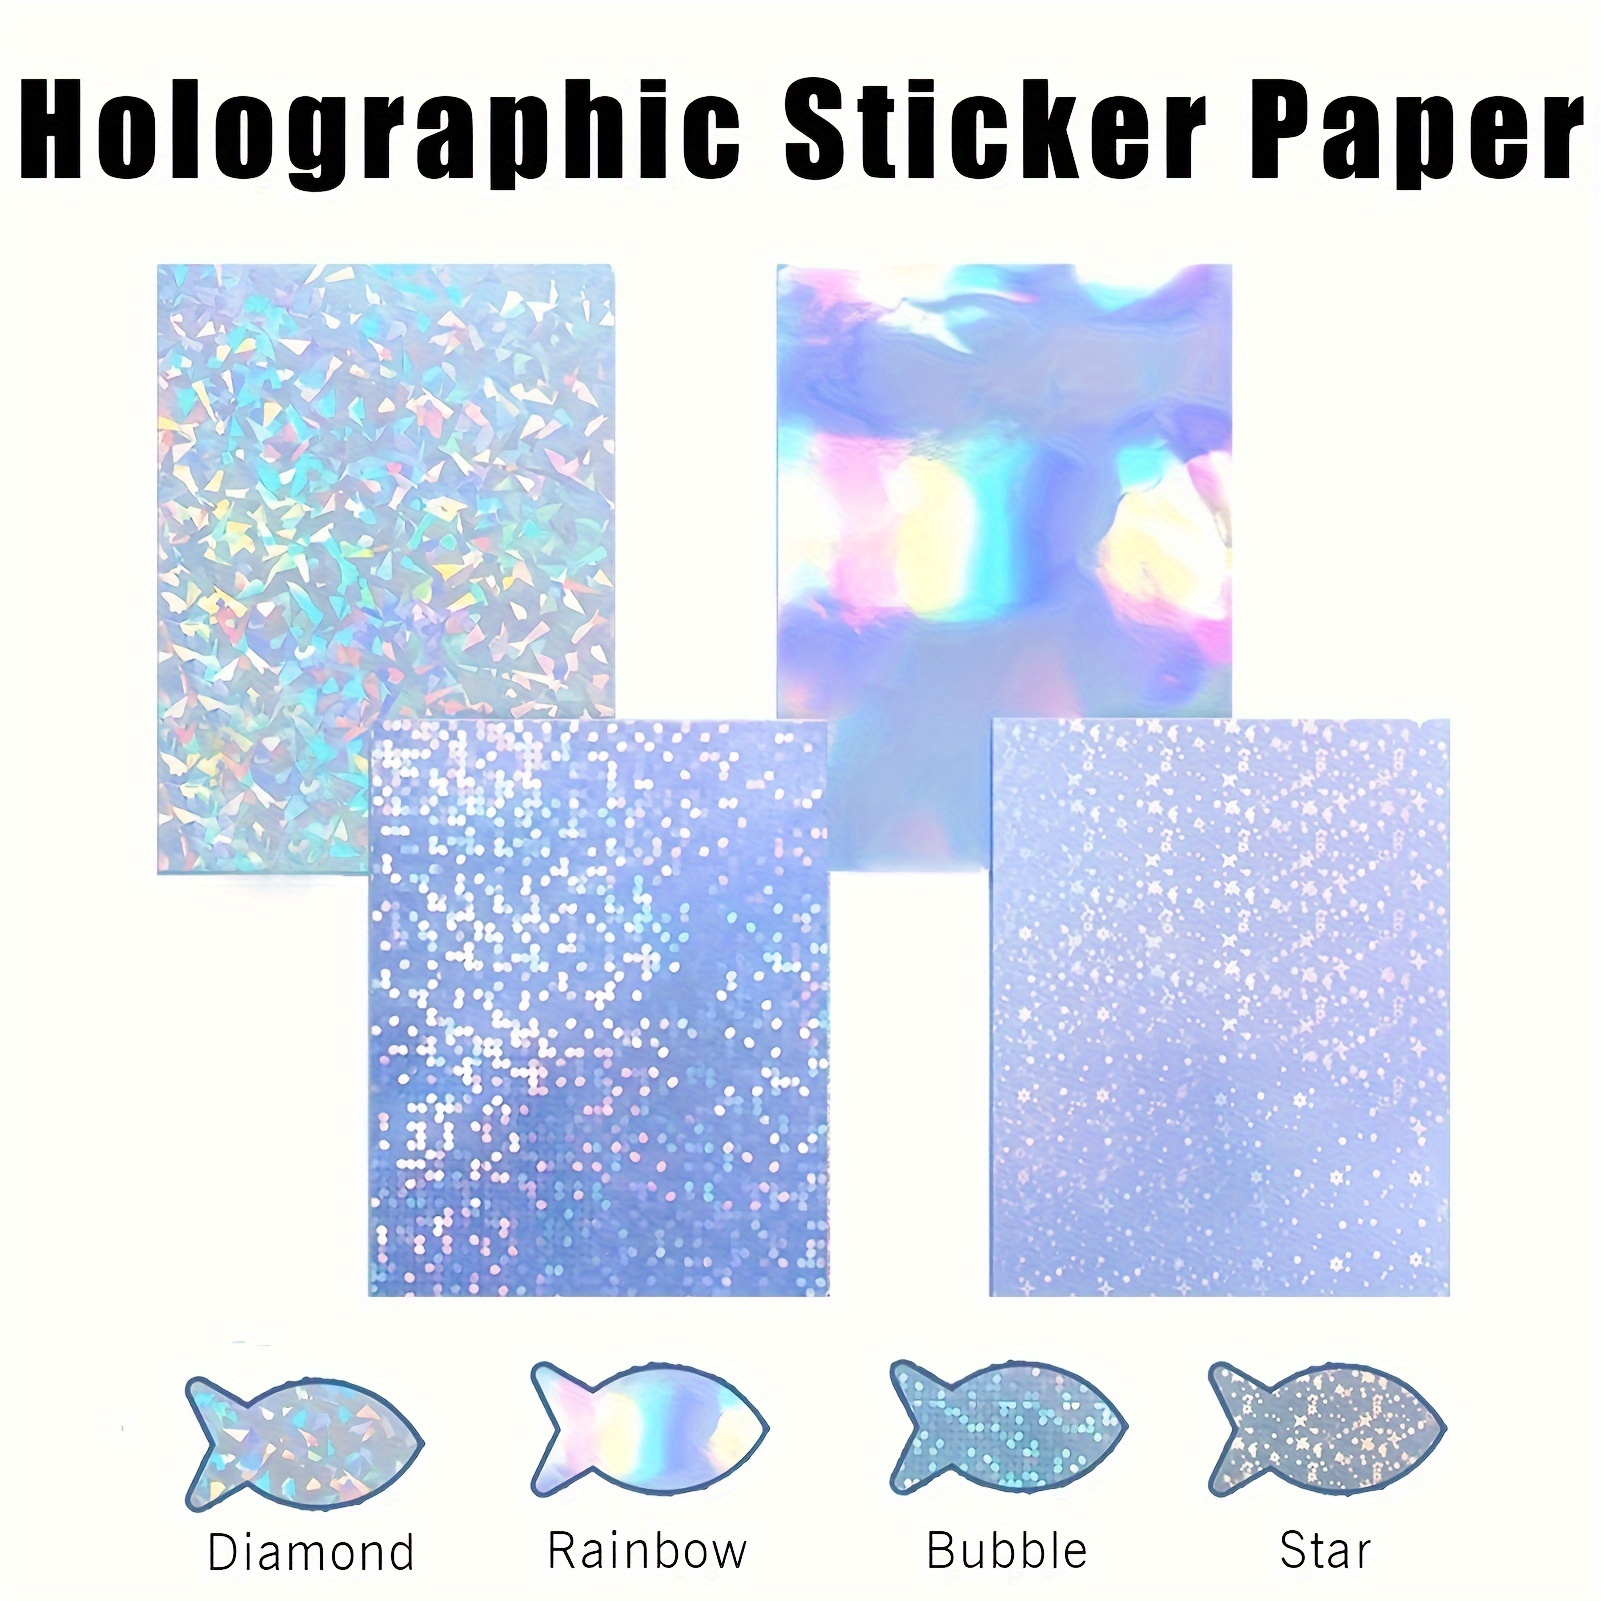 Papel adhesivo holográfico de vinilo transparente holográfico con purpurina  de 12 pulgadas x 20 pies, autoadhesivo, impermeable, transparente